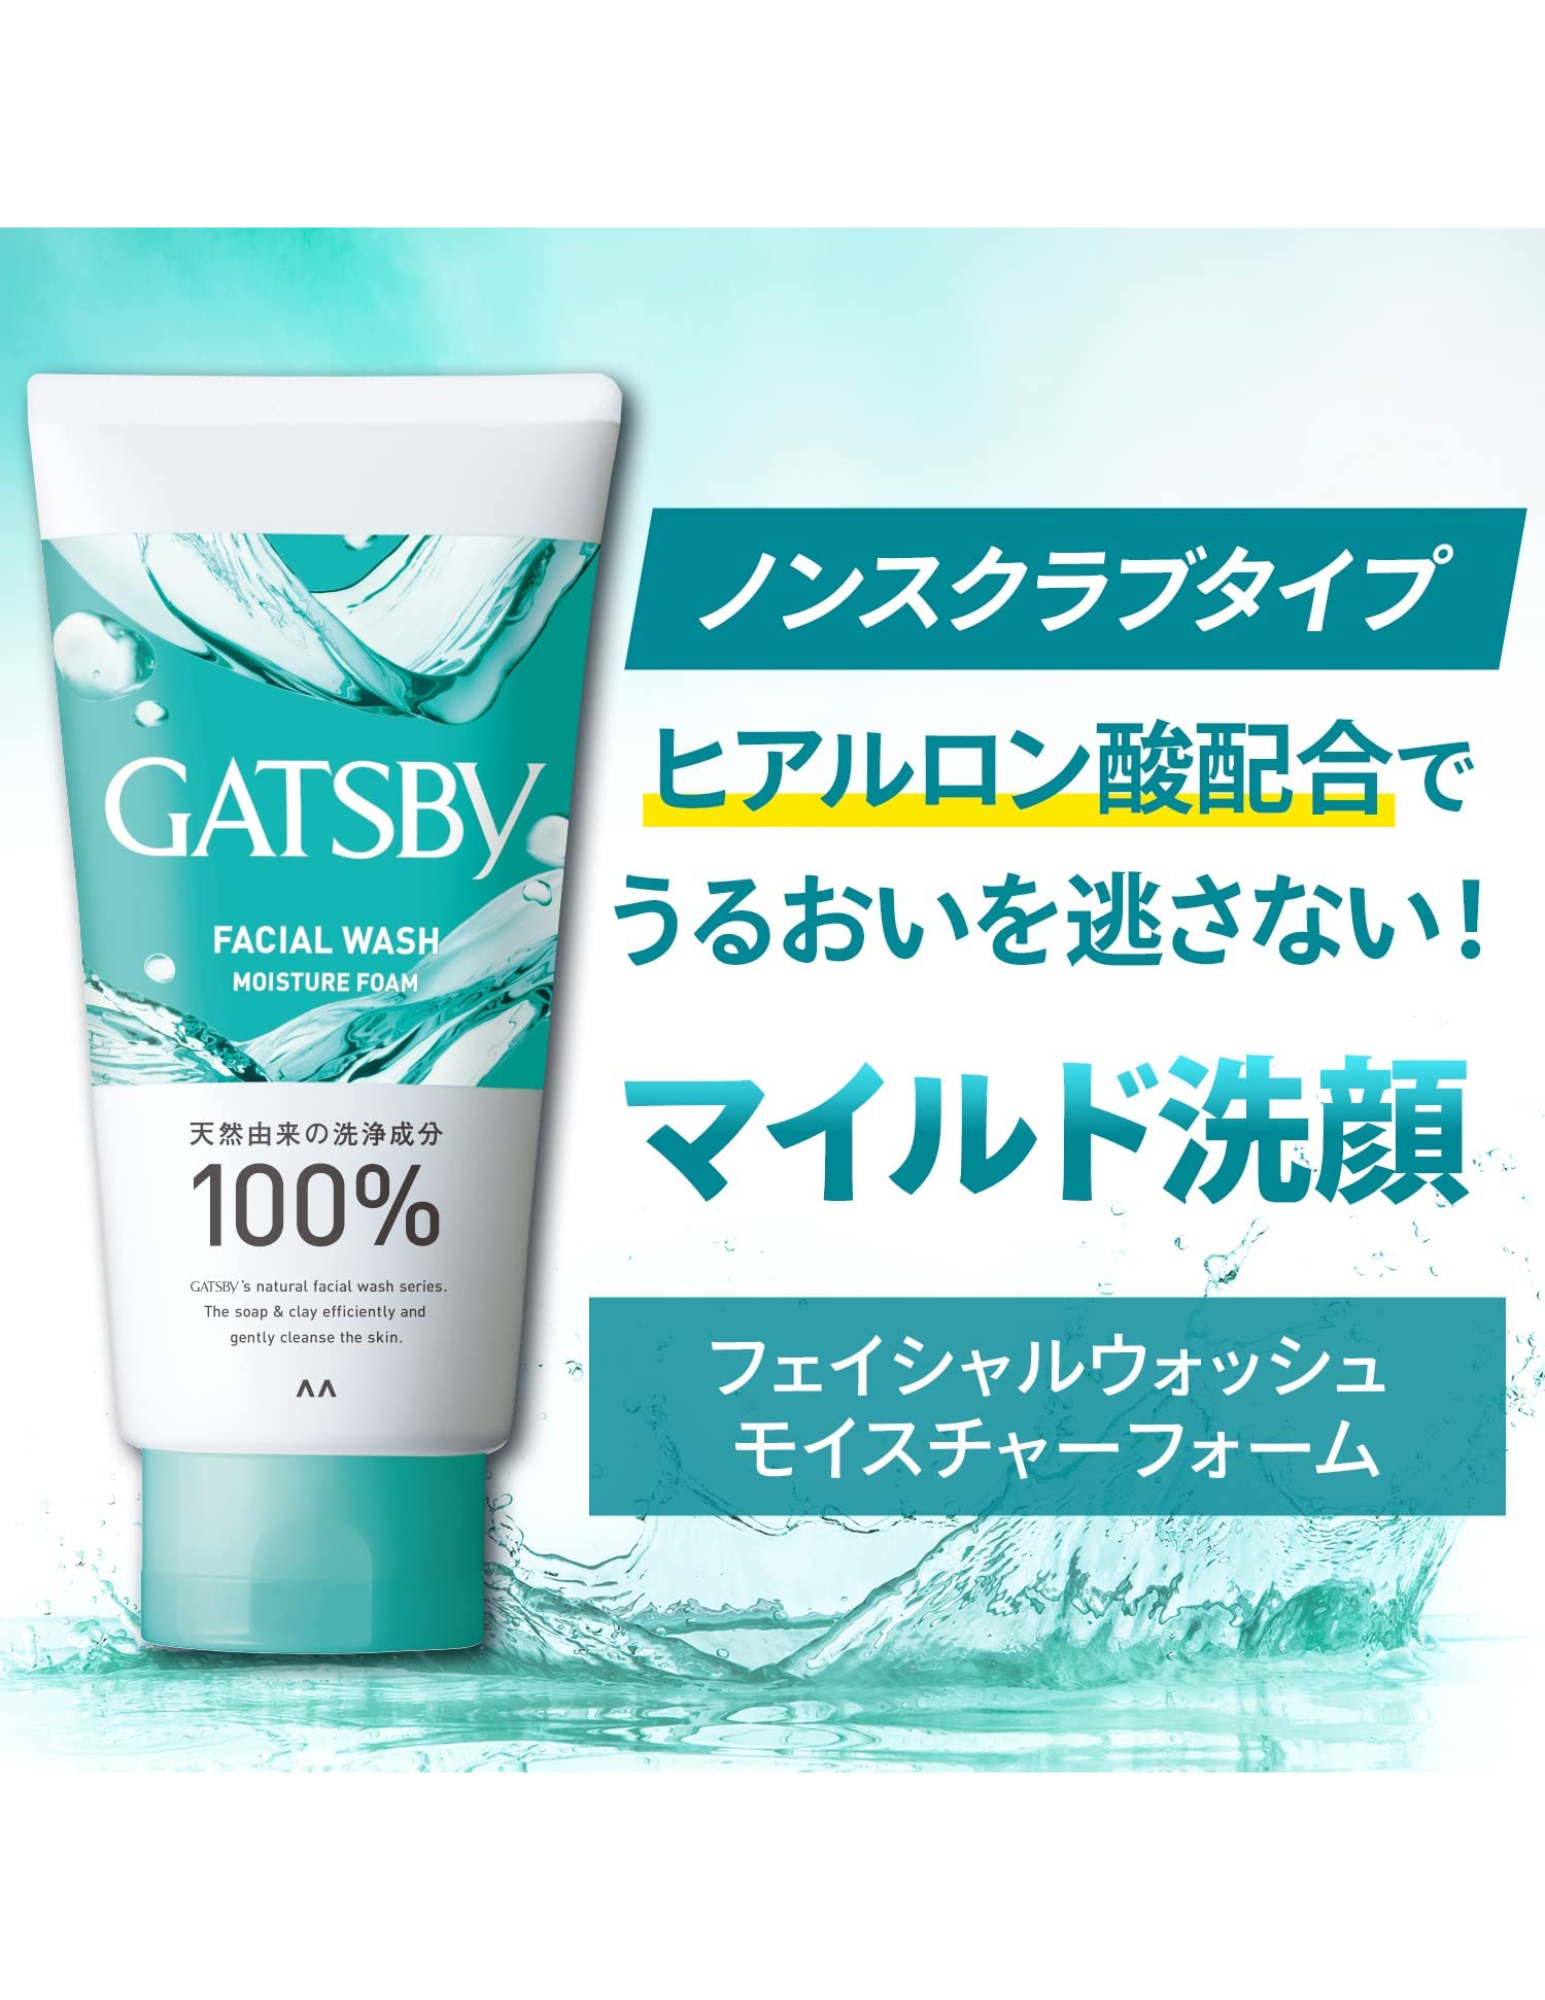 Gatsby Facial Wash | Moisture